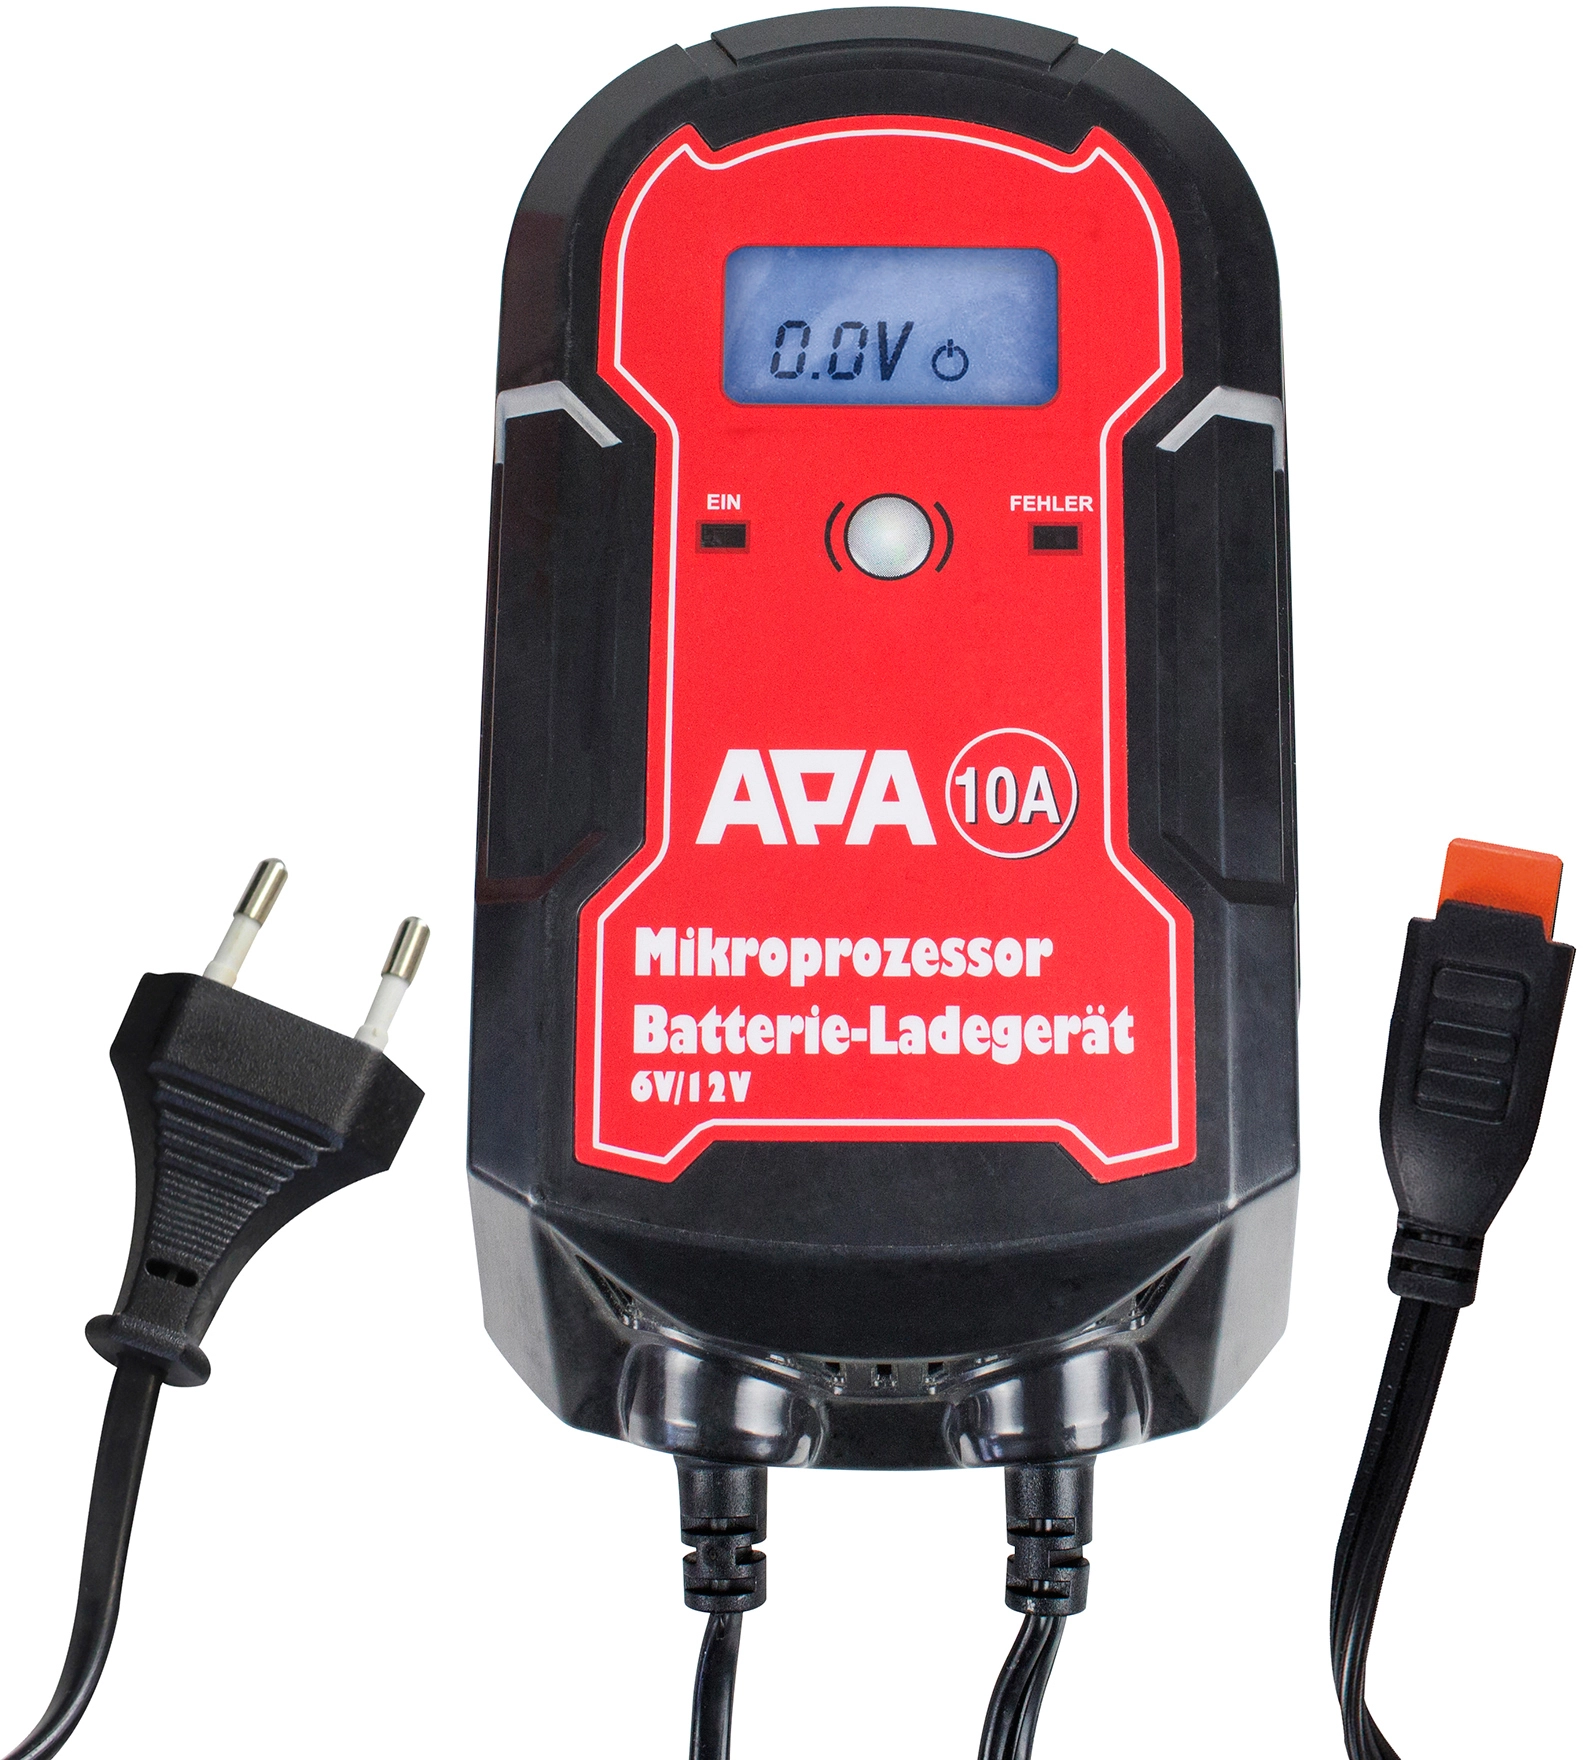 APA Mikroprozessor Batterieladegerät 6 V/12 V 10 A kaufen bei OBI